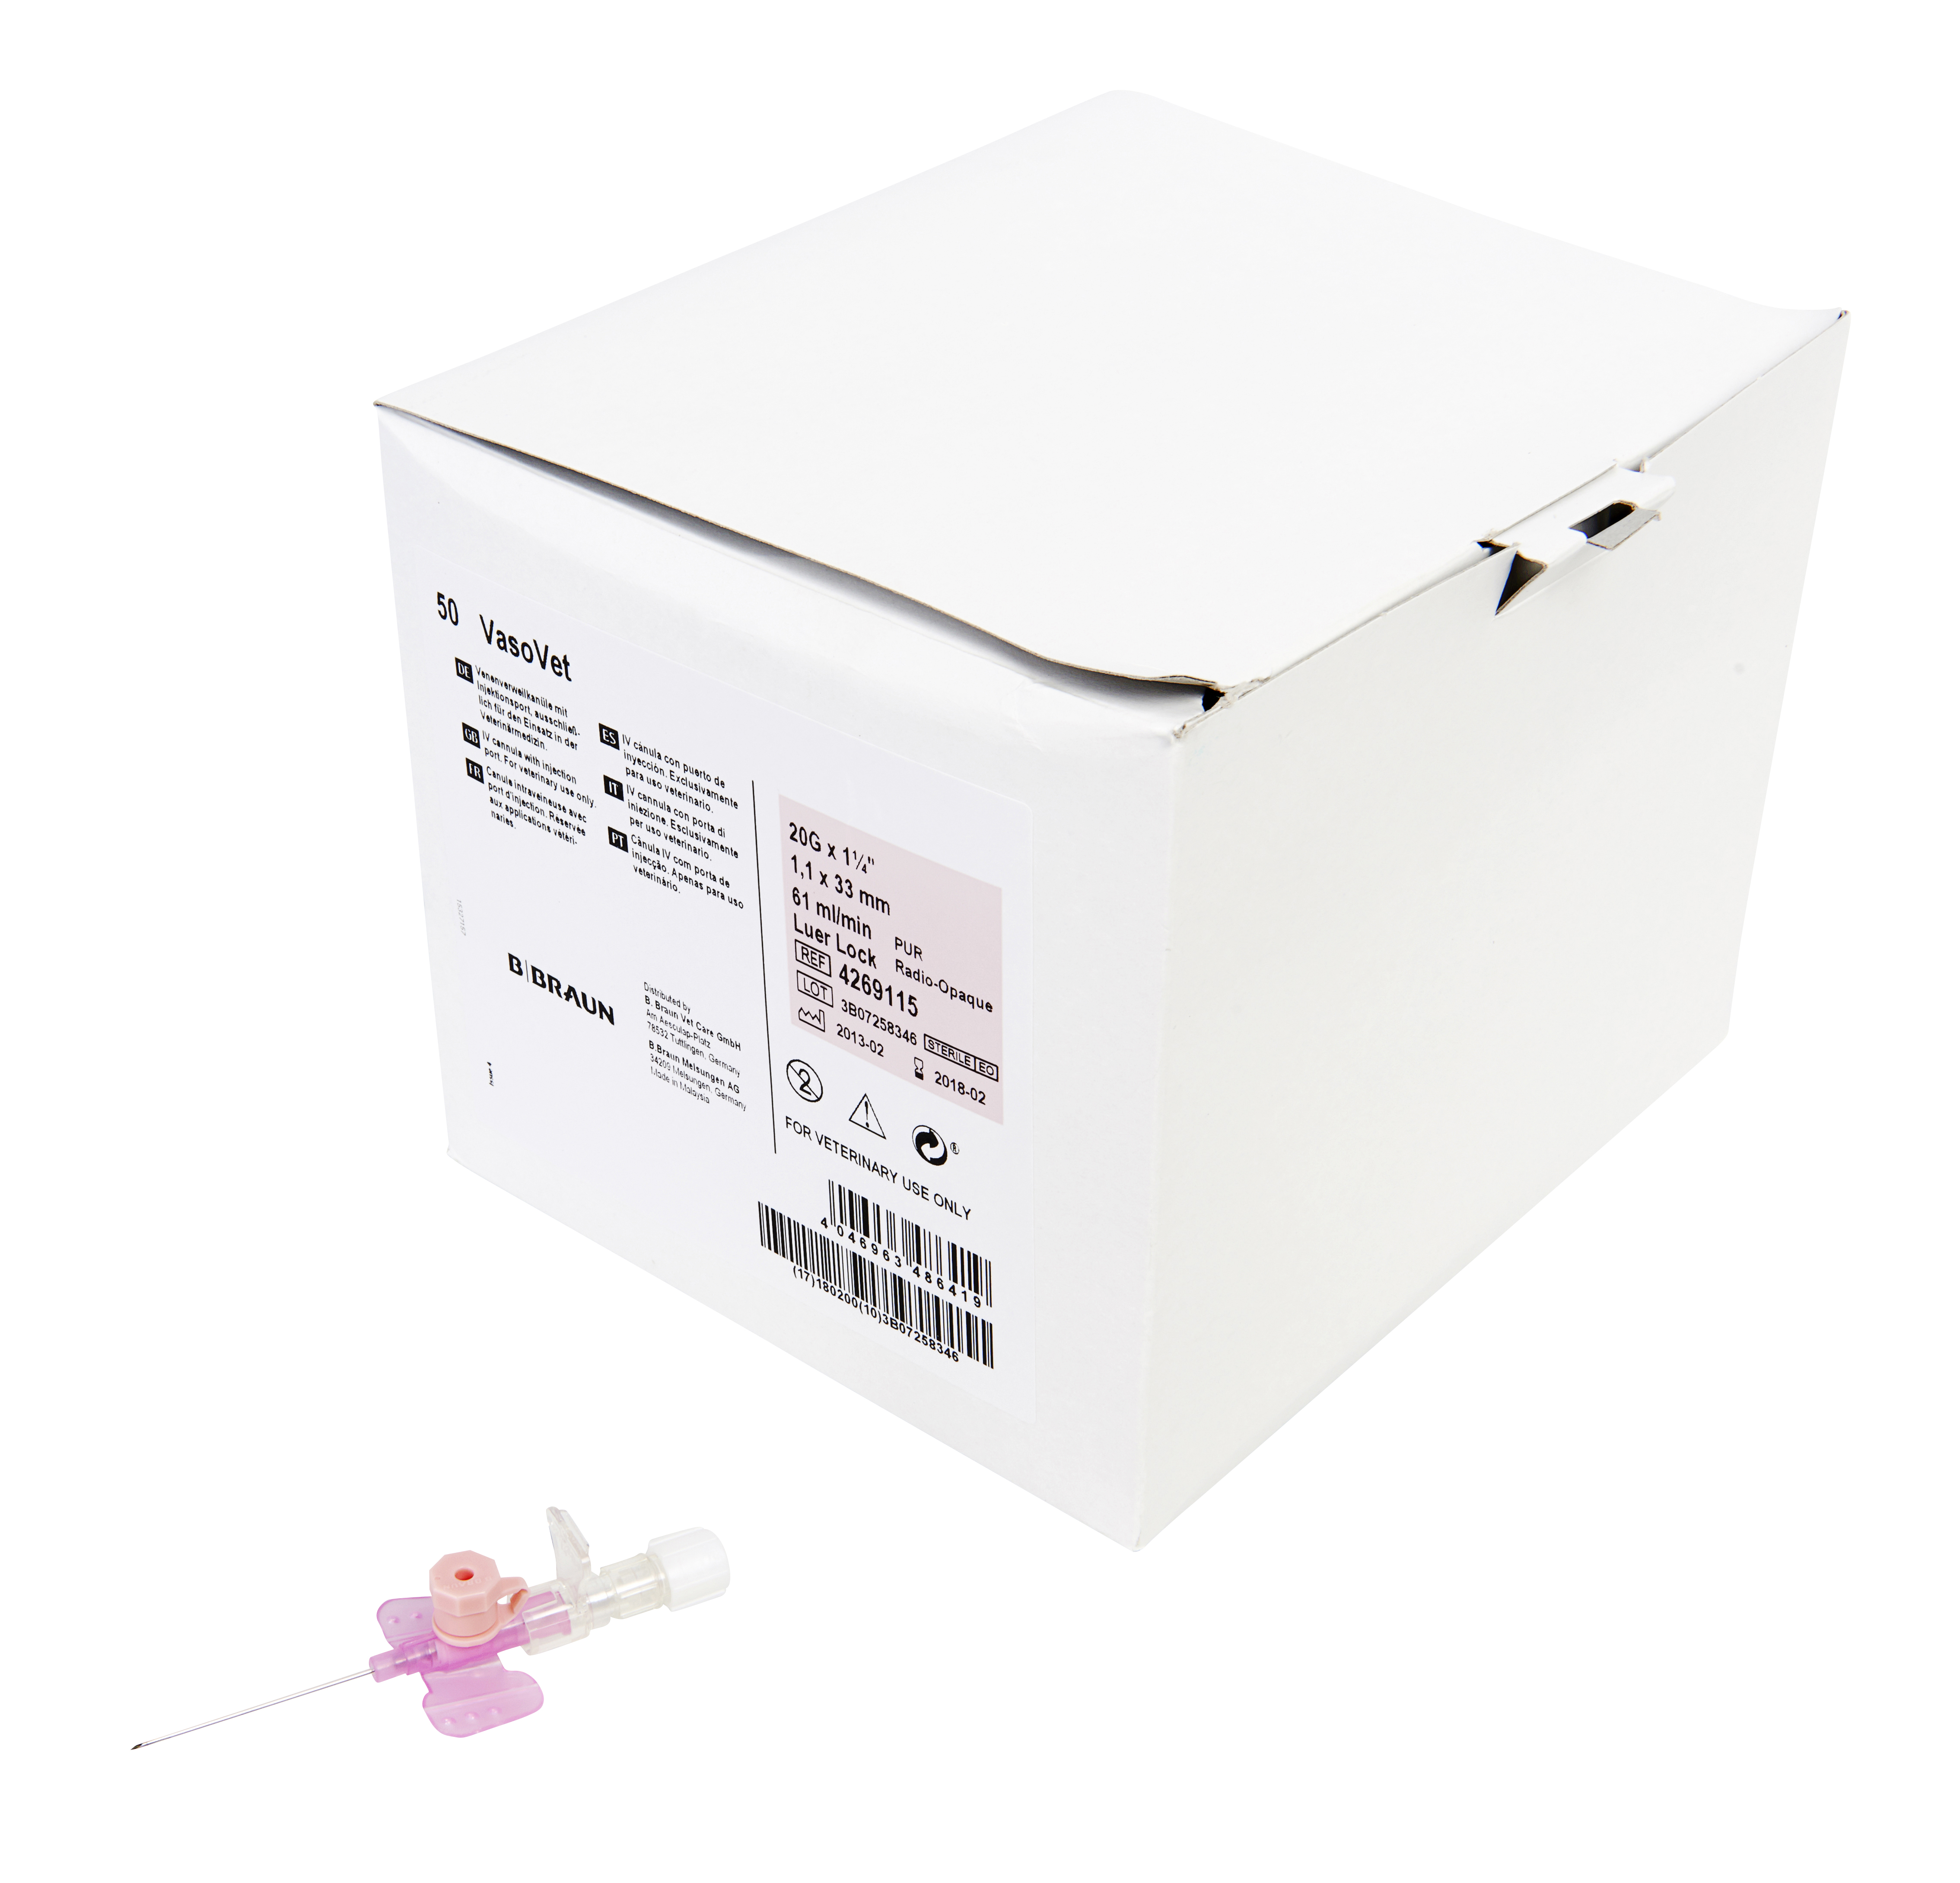 VasoVet IV Catheter, 1.1 x 33 mm, 20G x 1 1/4“, rose-pink, 50/pk